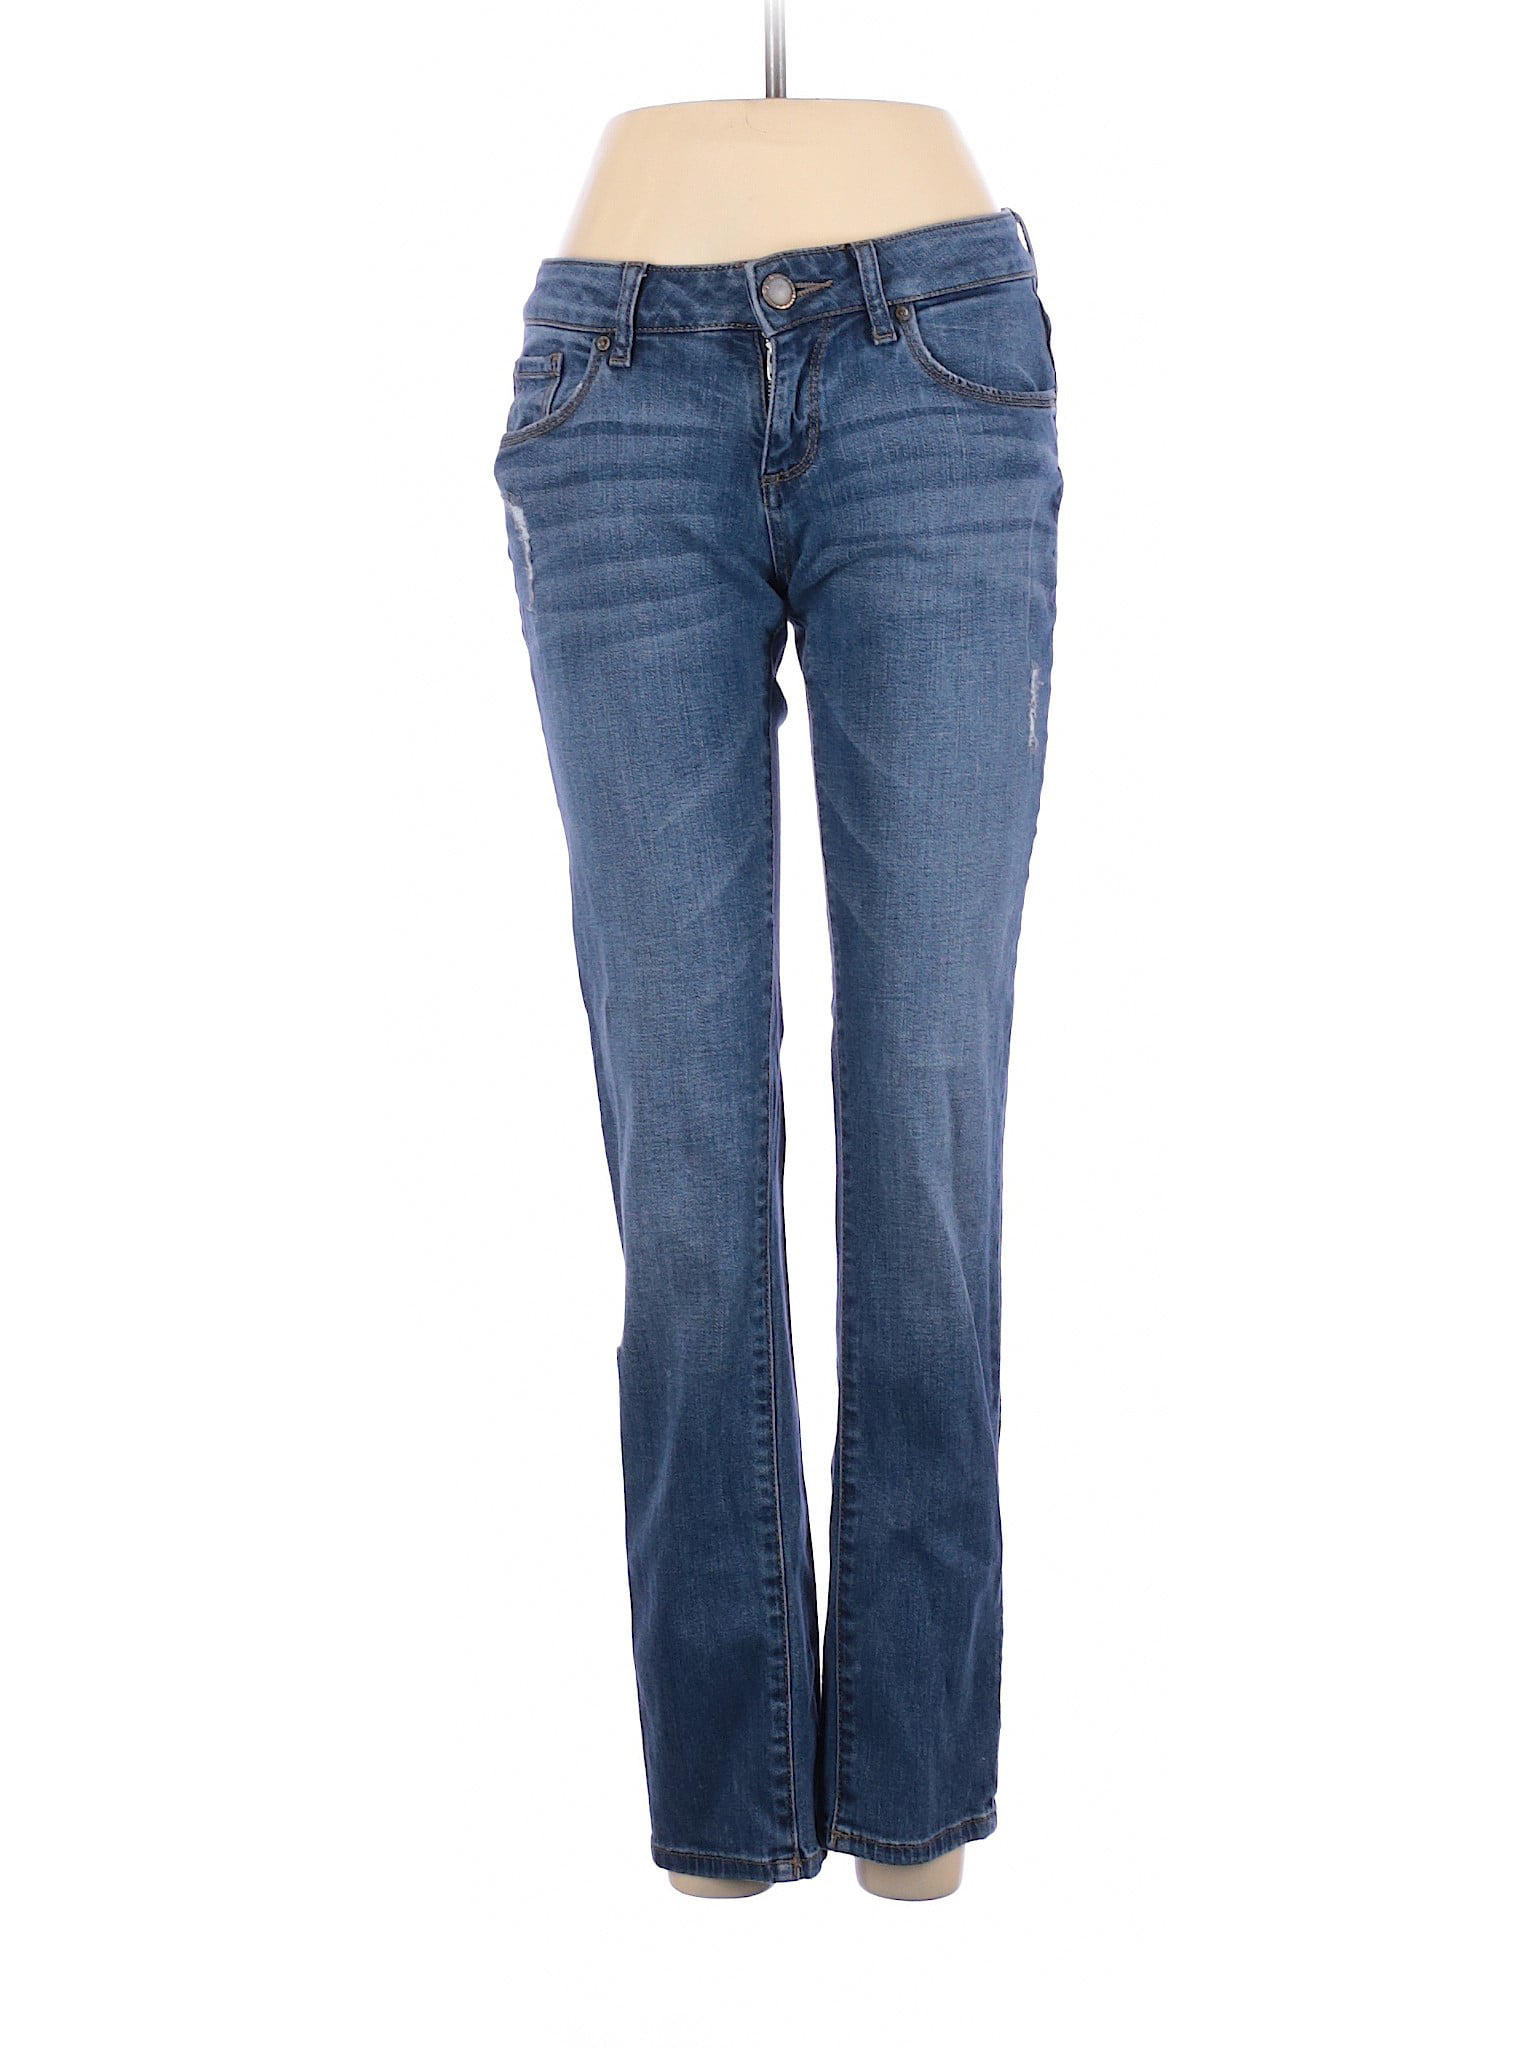 DL1961 - Pre-Owned DL1961 Women's Size 23W Jeans - Walmart.com ...